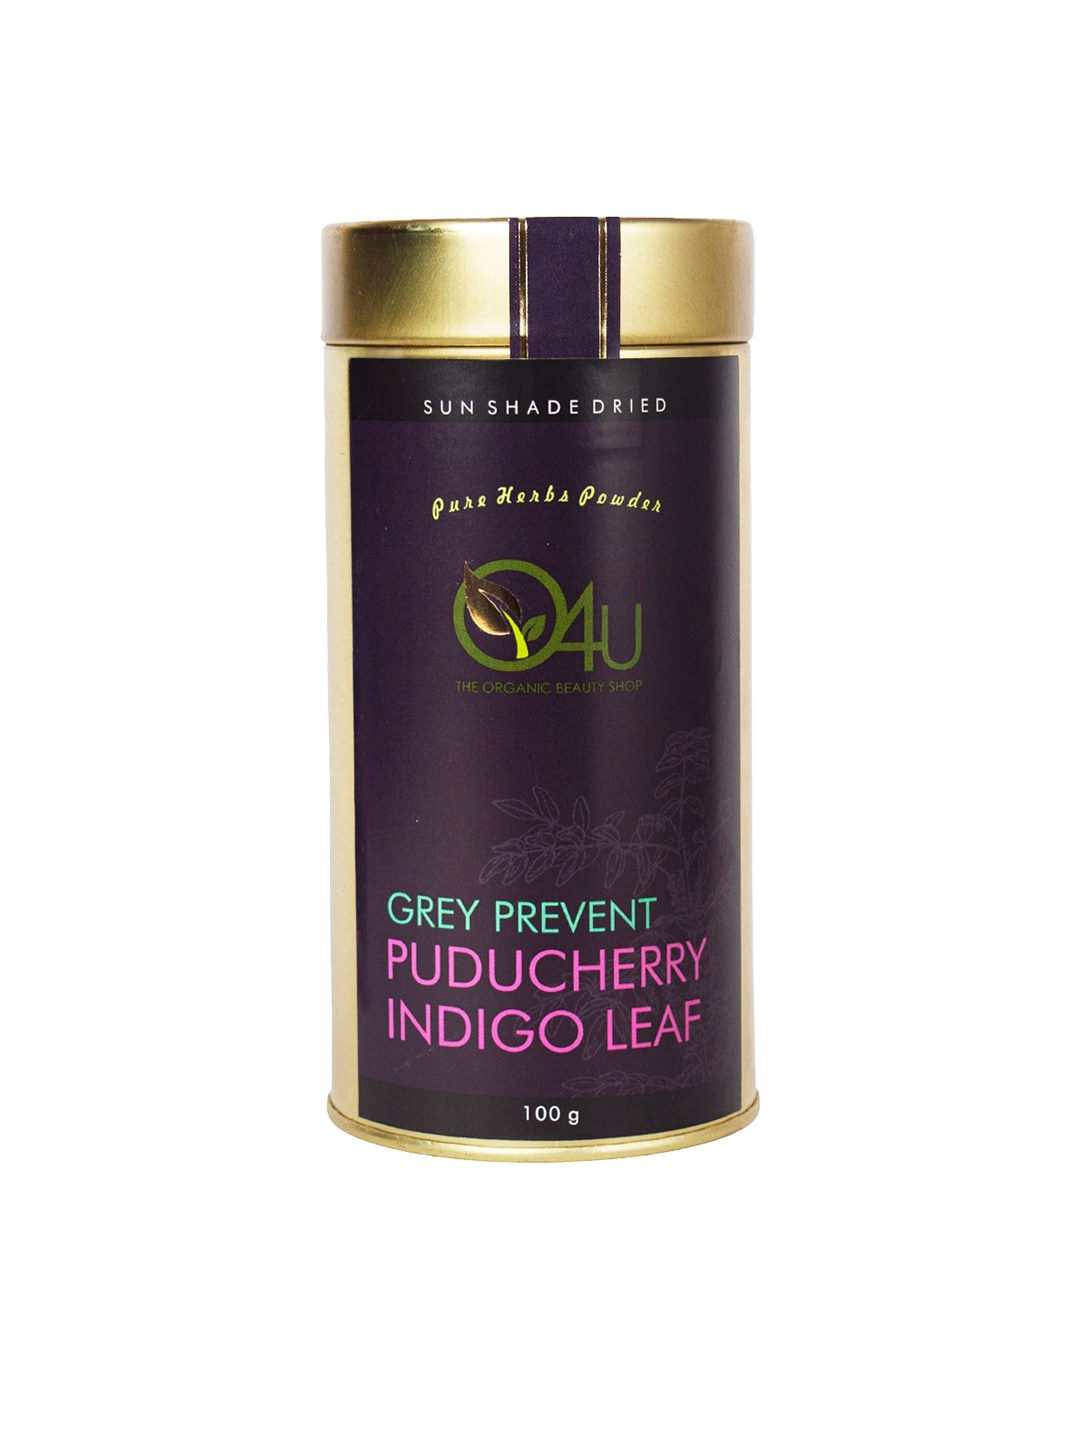 O4U Grey Prevent Puducherry Indigo Leaf Powder for Dandruff & Damage Control 100g Price in India